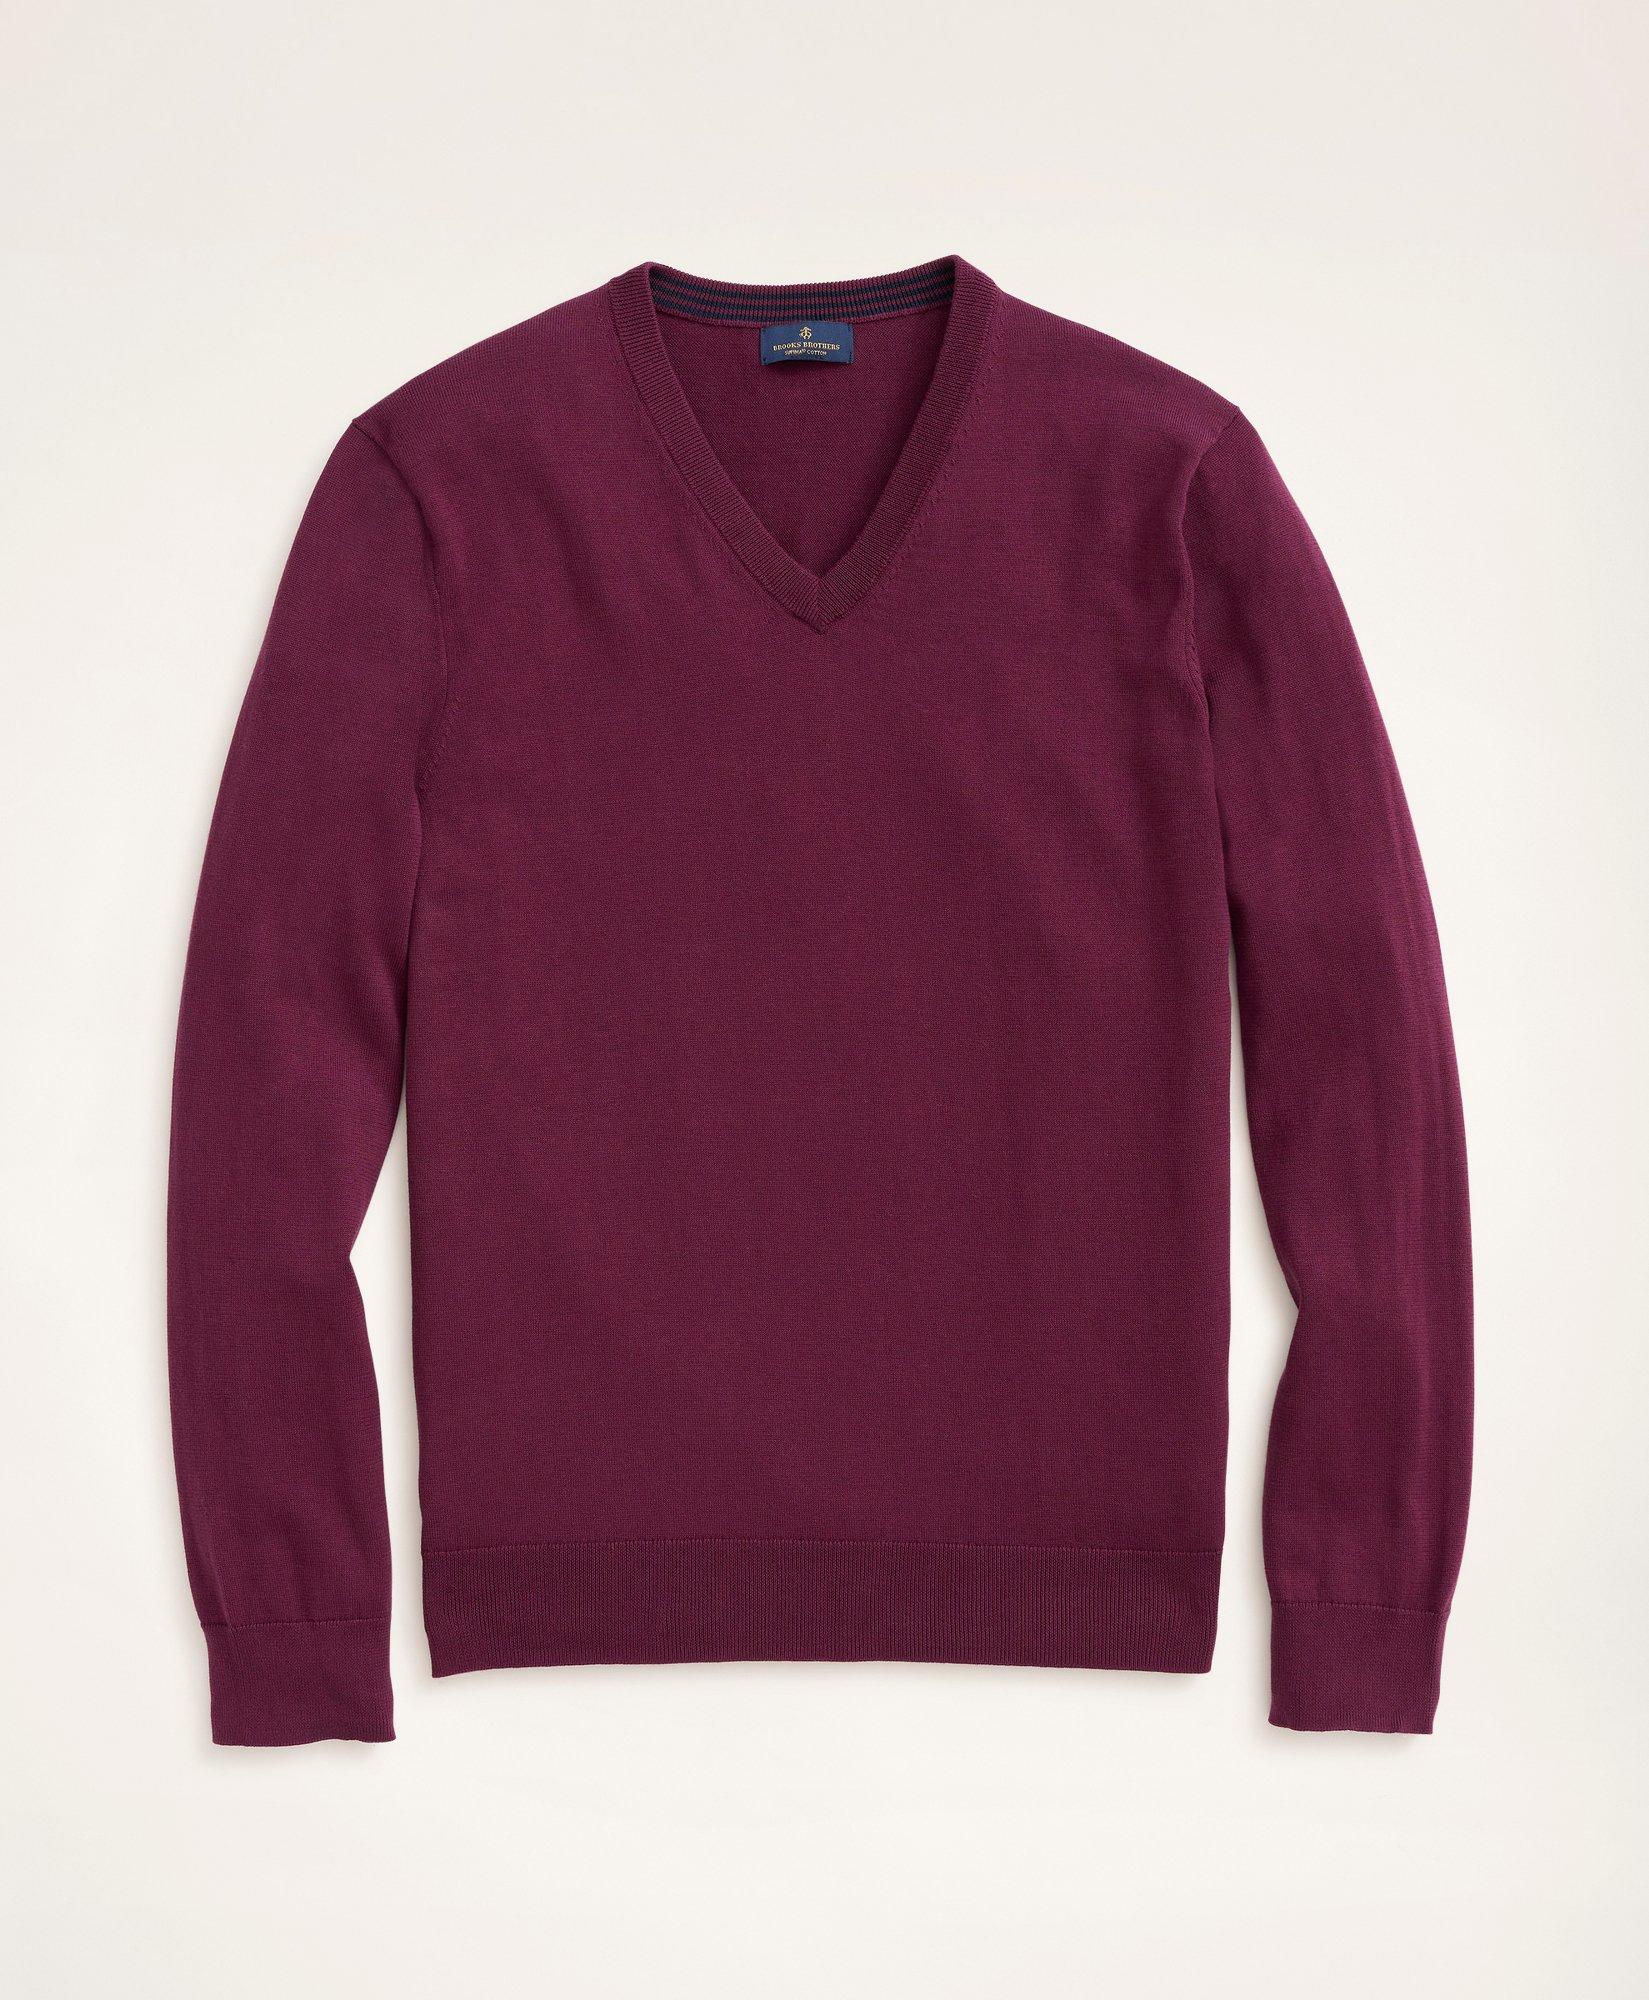 Brooks Brothers Big & Tall Supima Cotton V-neck Sweater | Burgundy | Size 2x Tall